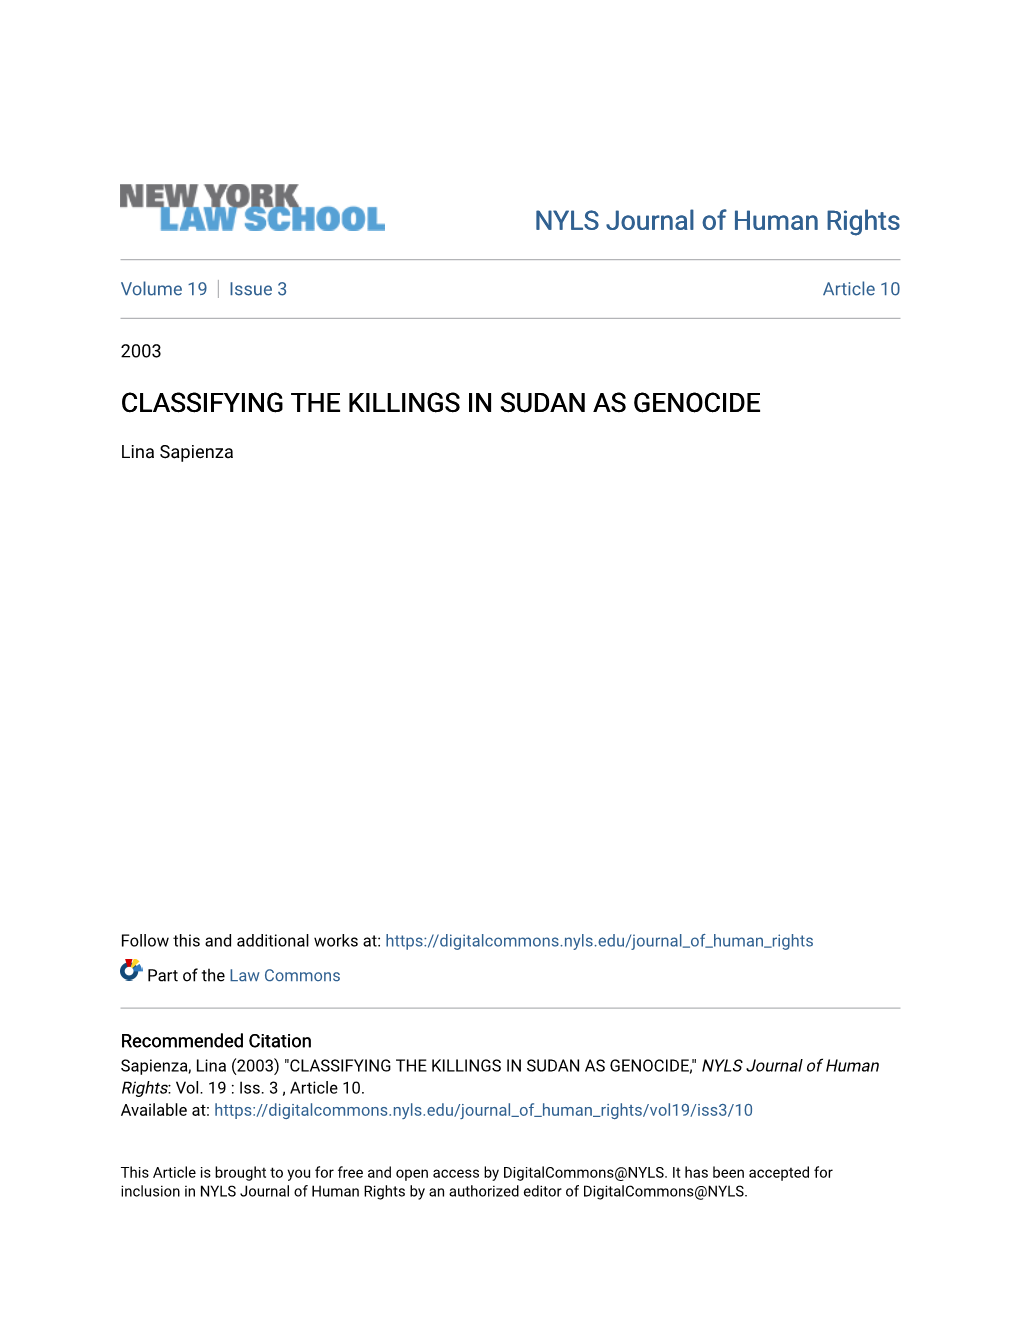 Classifying the Killings in Sudan As Genocide